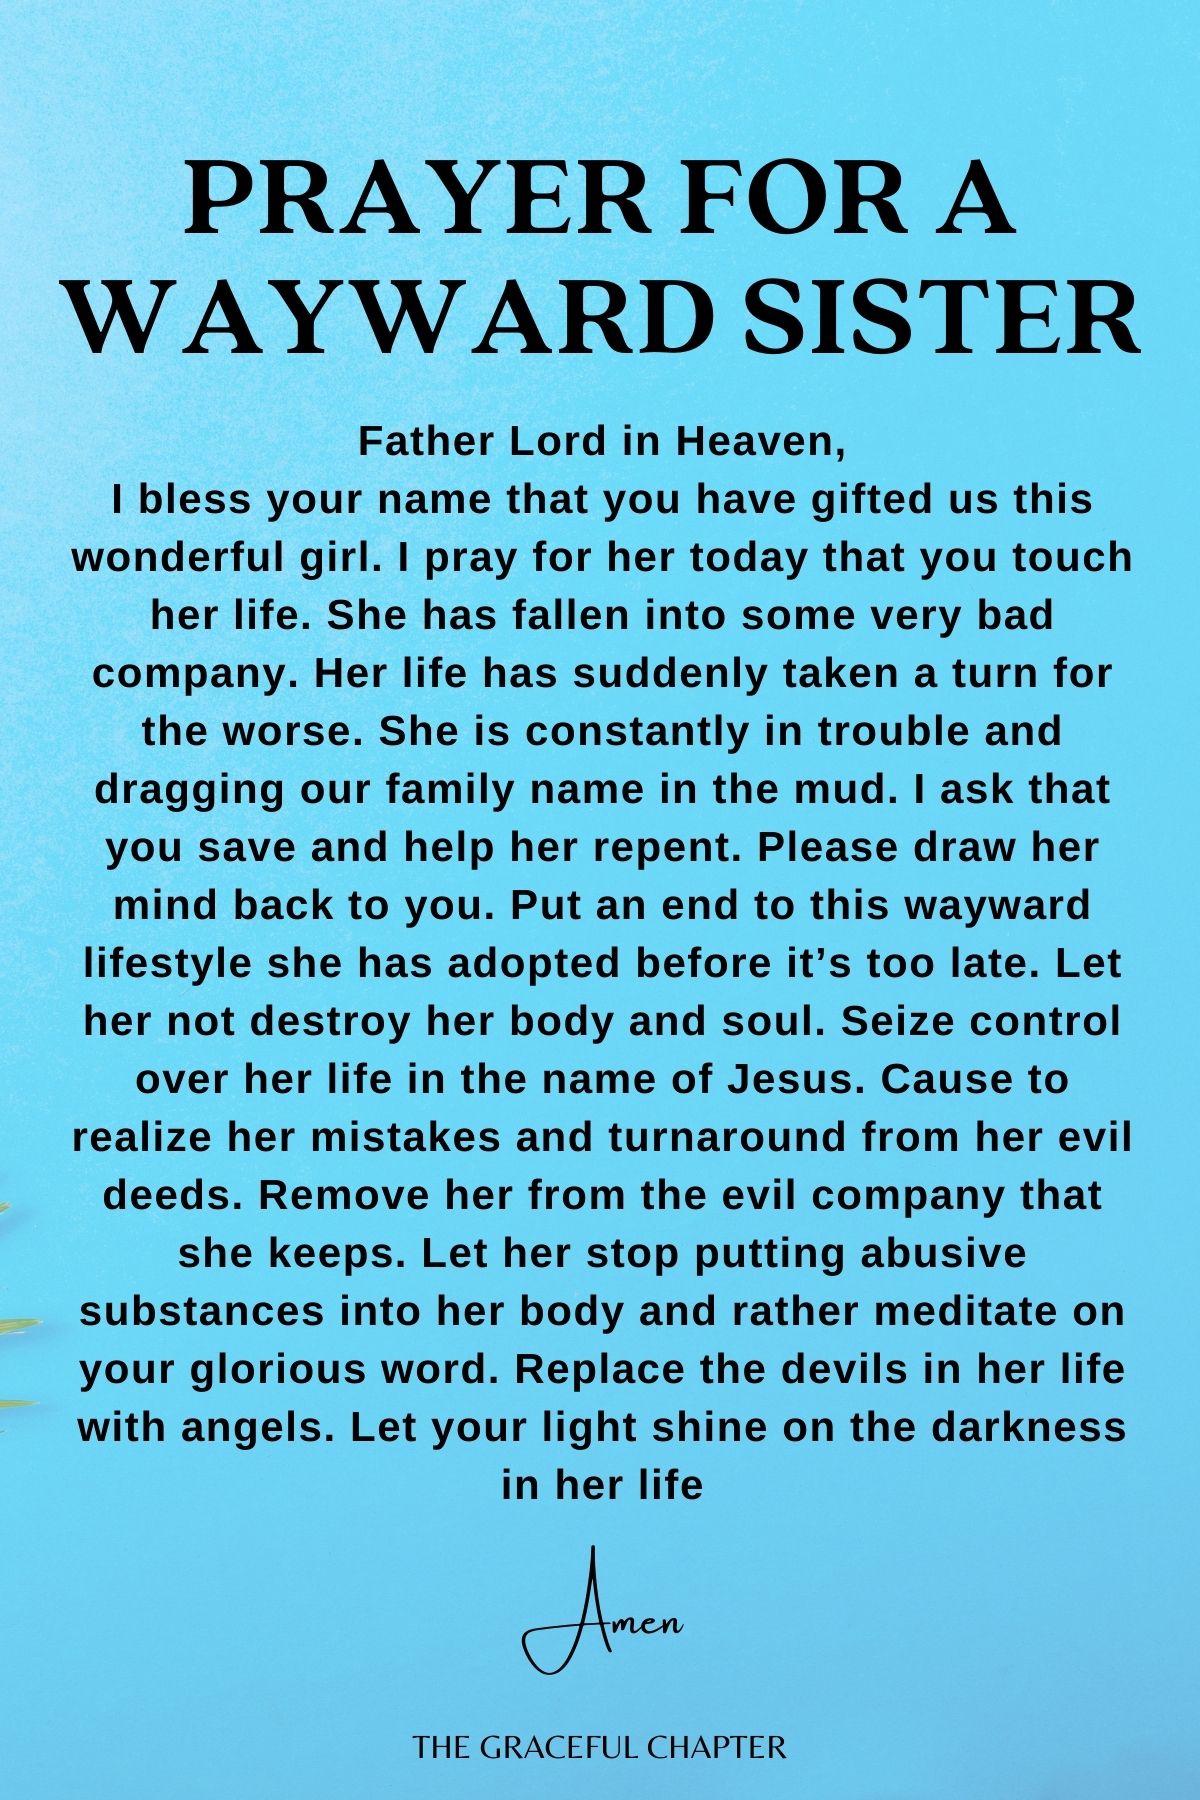 Prayer for a wayward sister - prayers for my sister